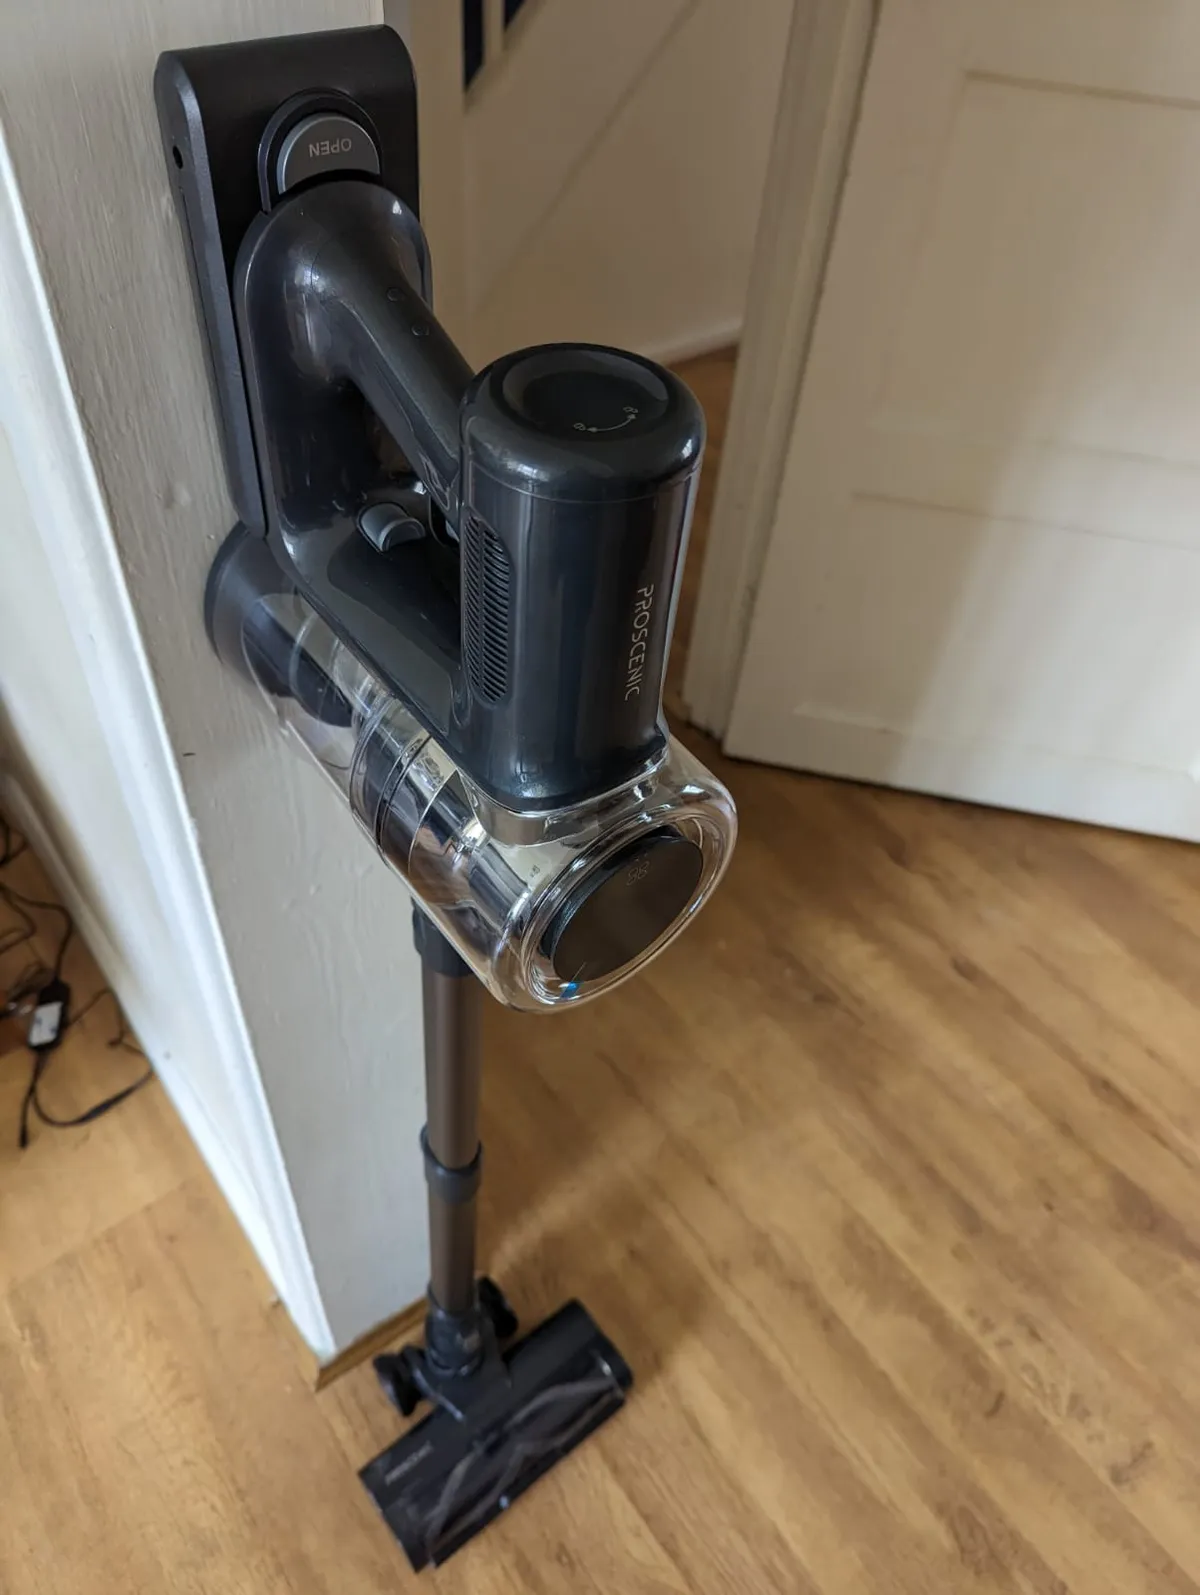 Proscenic P12 cordless vacuum cleaner